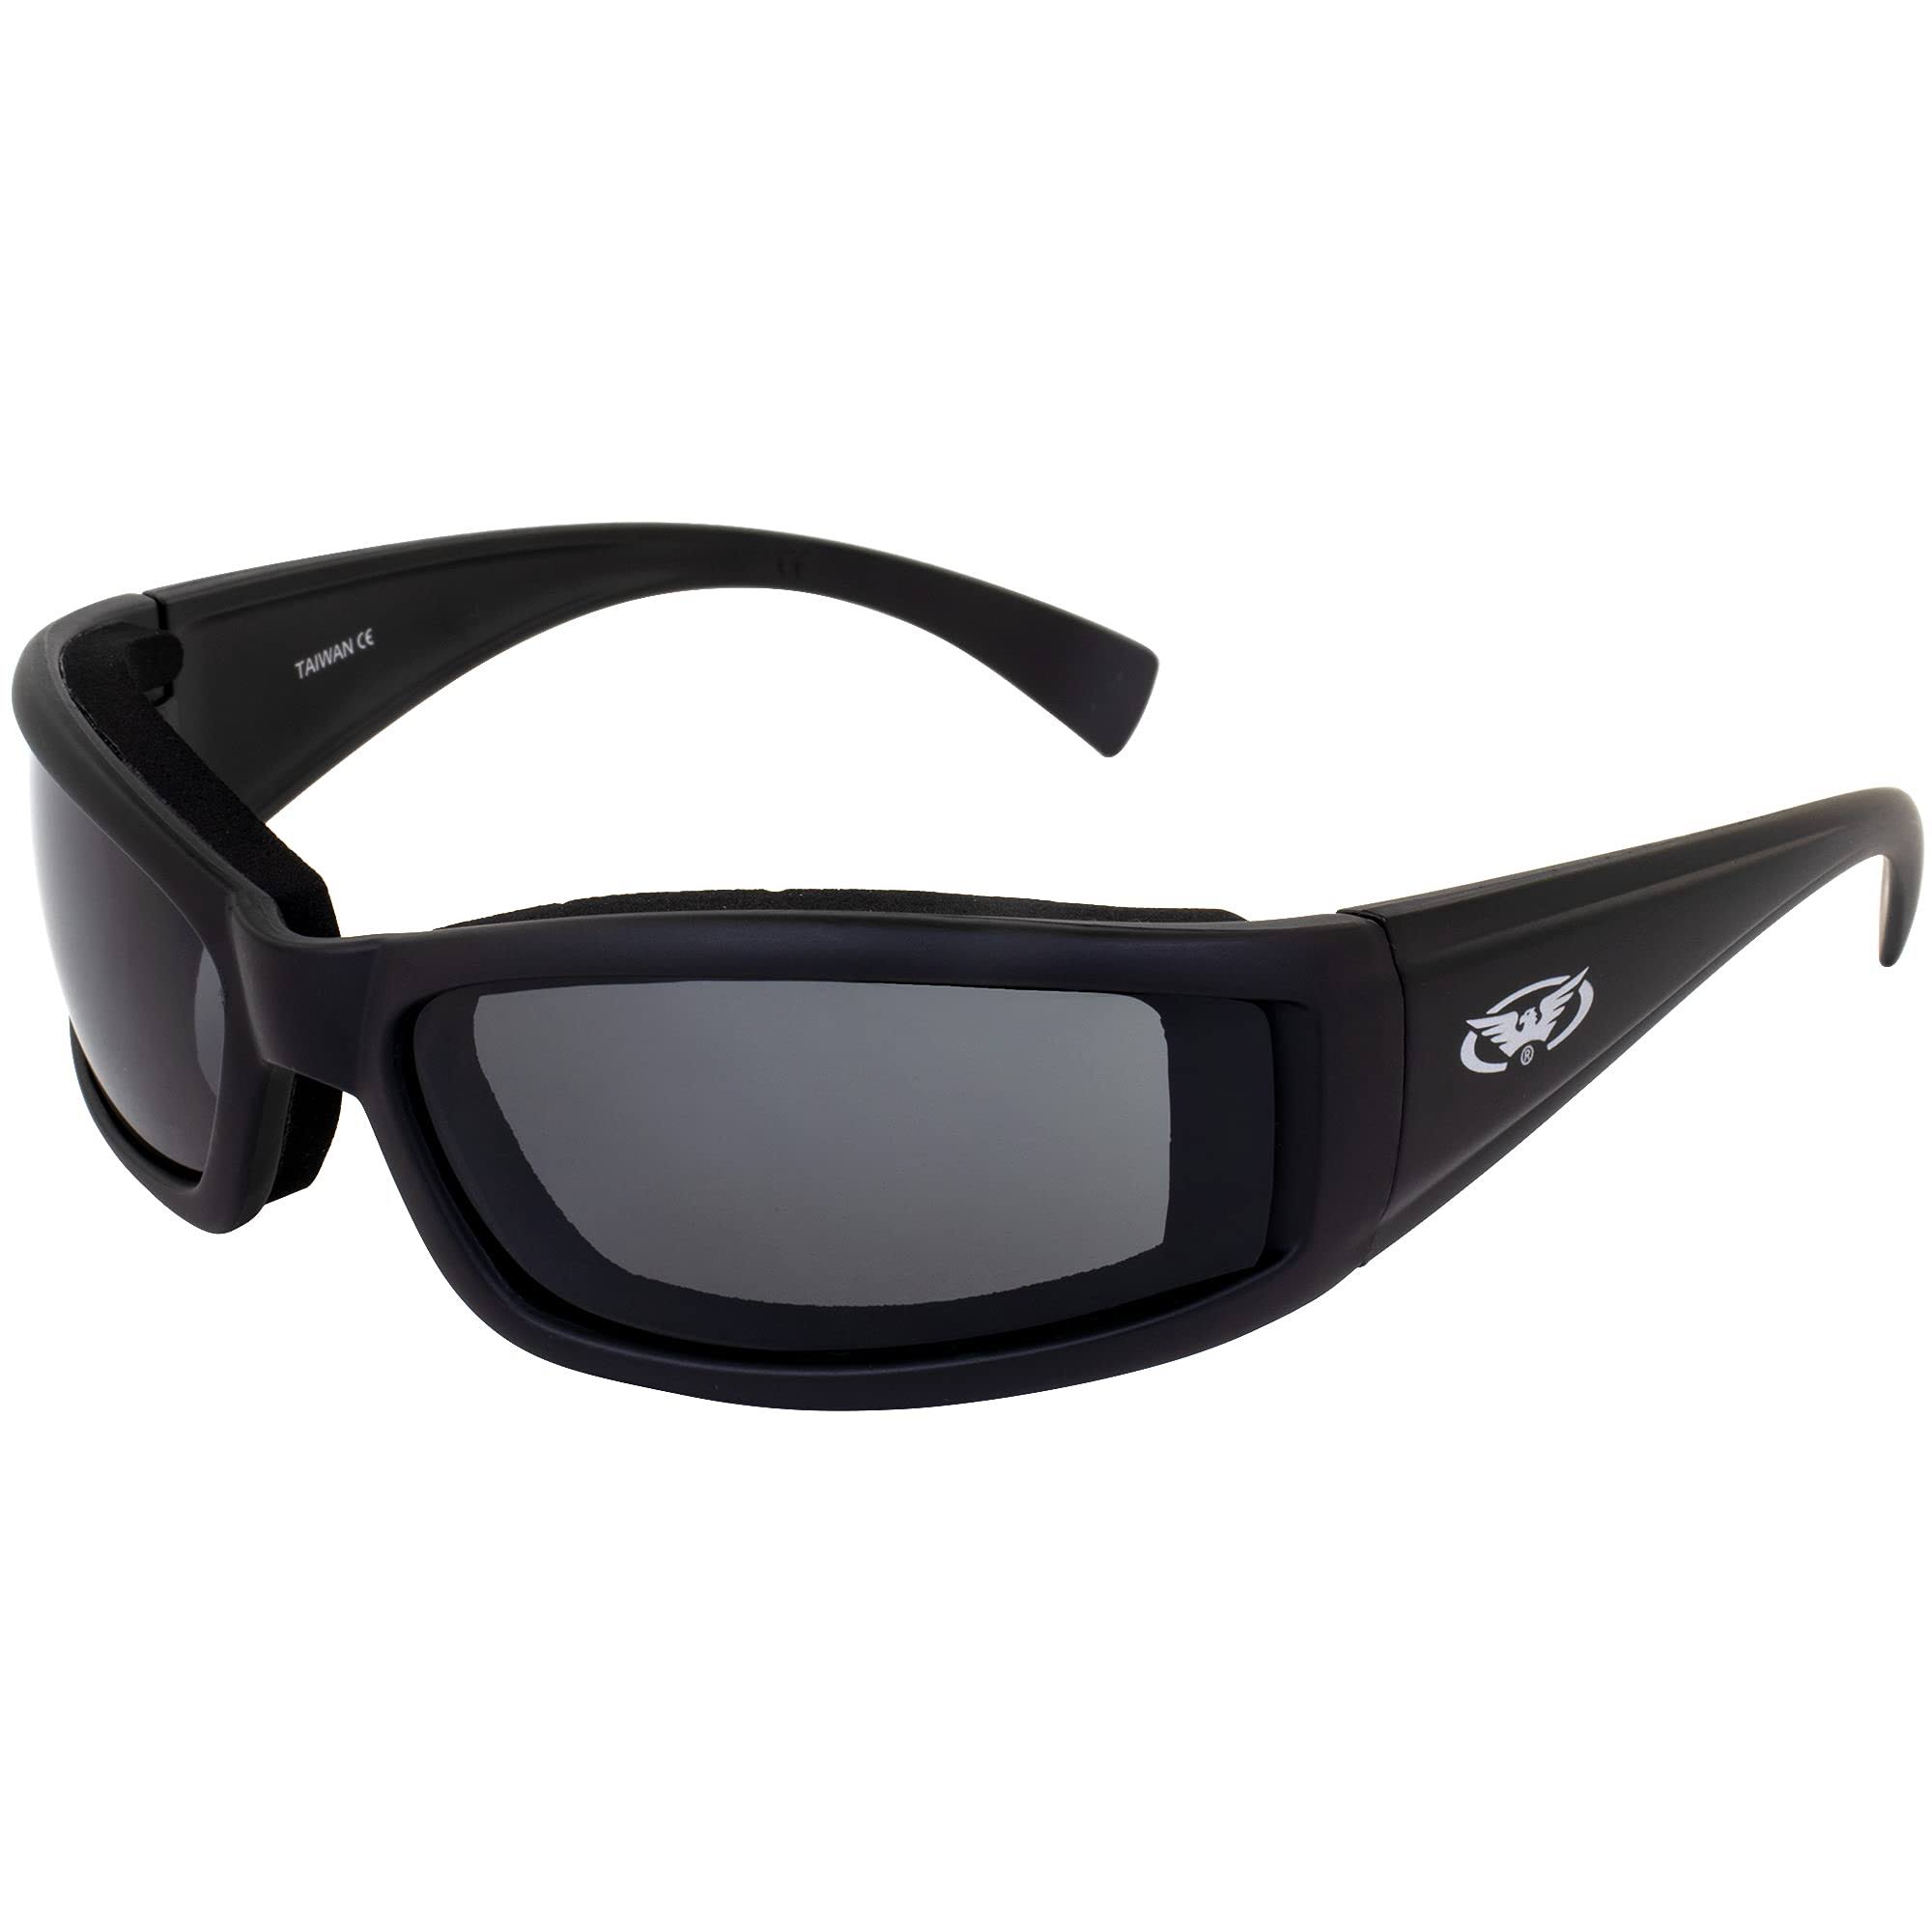 Global Vision Eyewear Sunglasses - Smoke